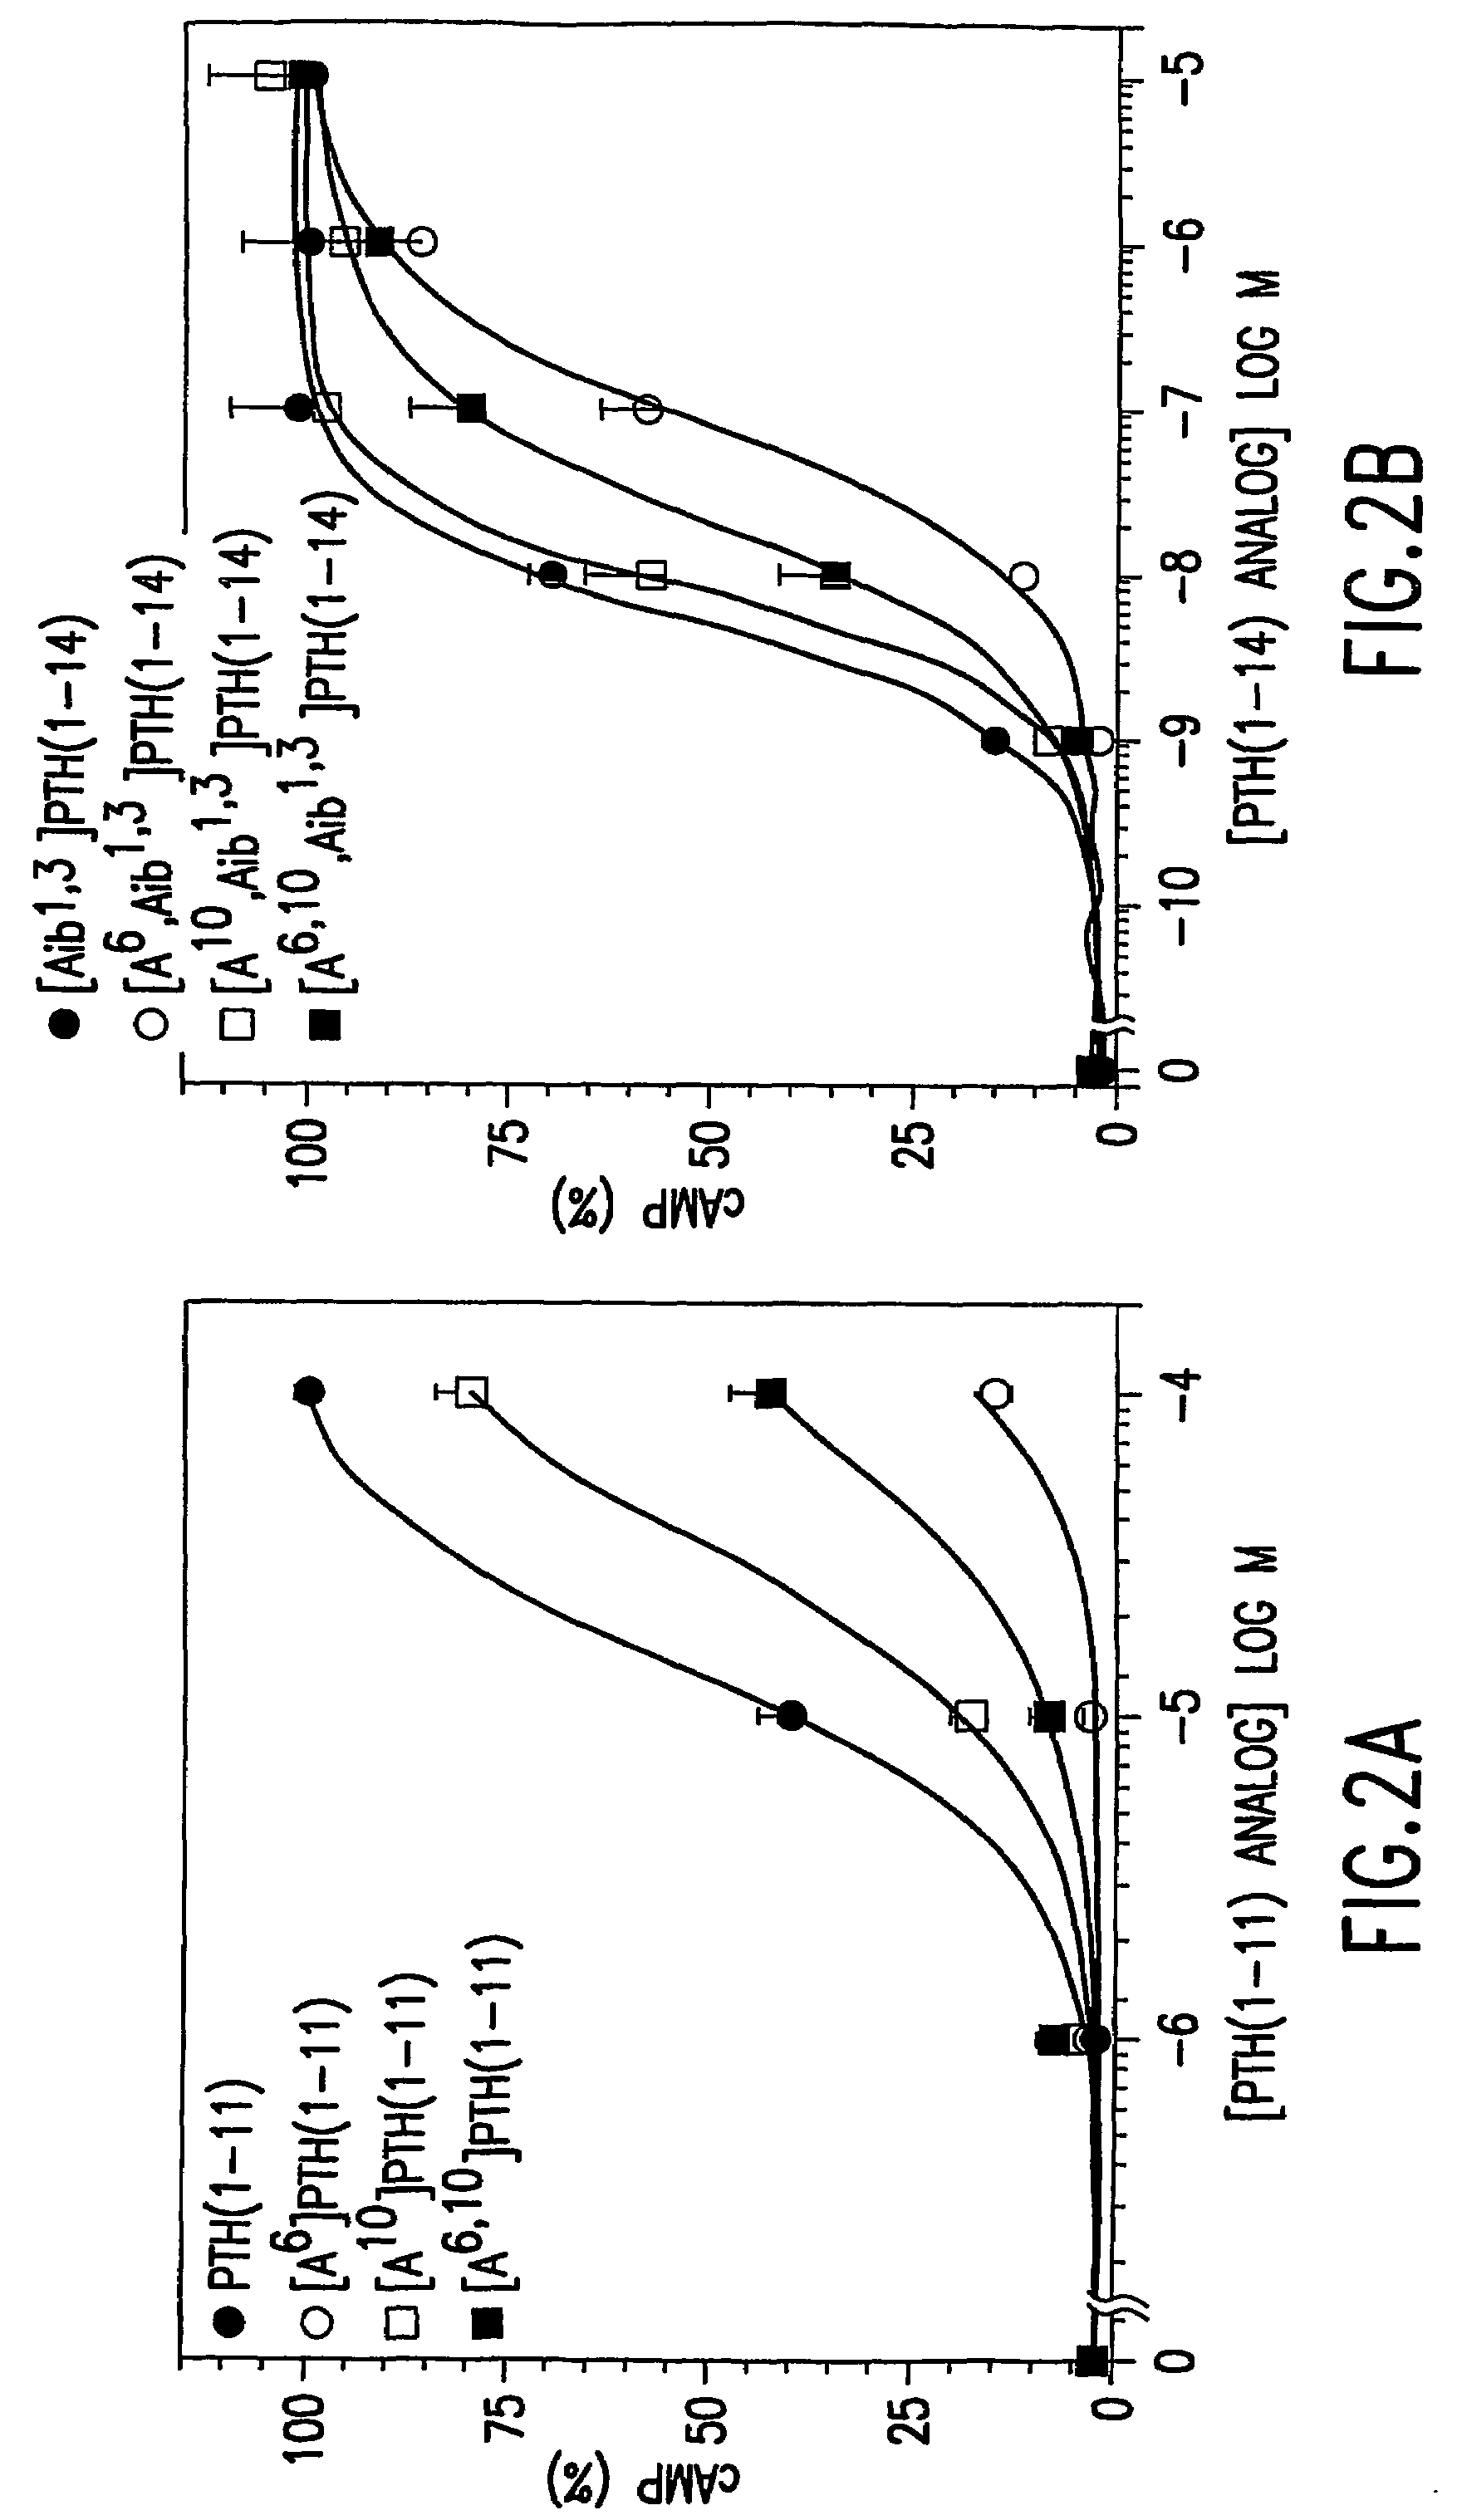 Conformationally constrained parathyroid hormone (PTH) analogs with lactam bridges